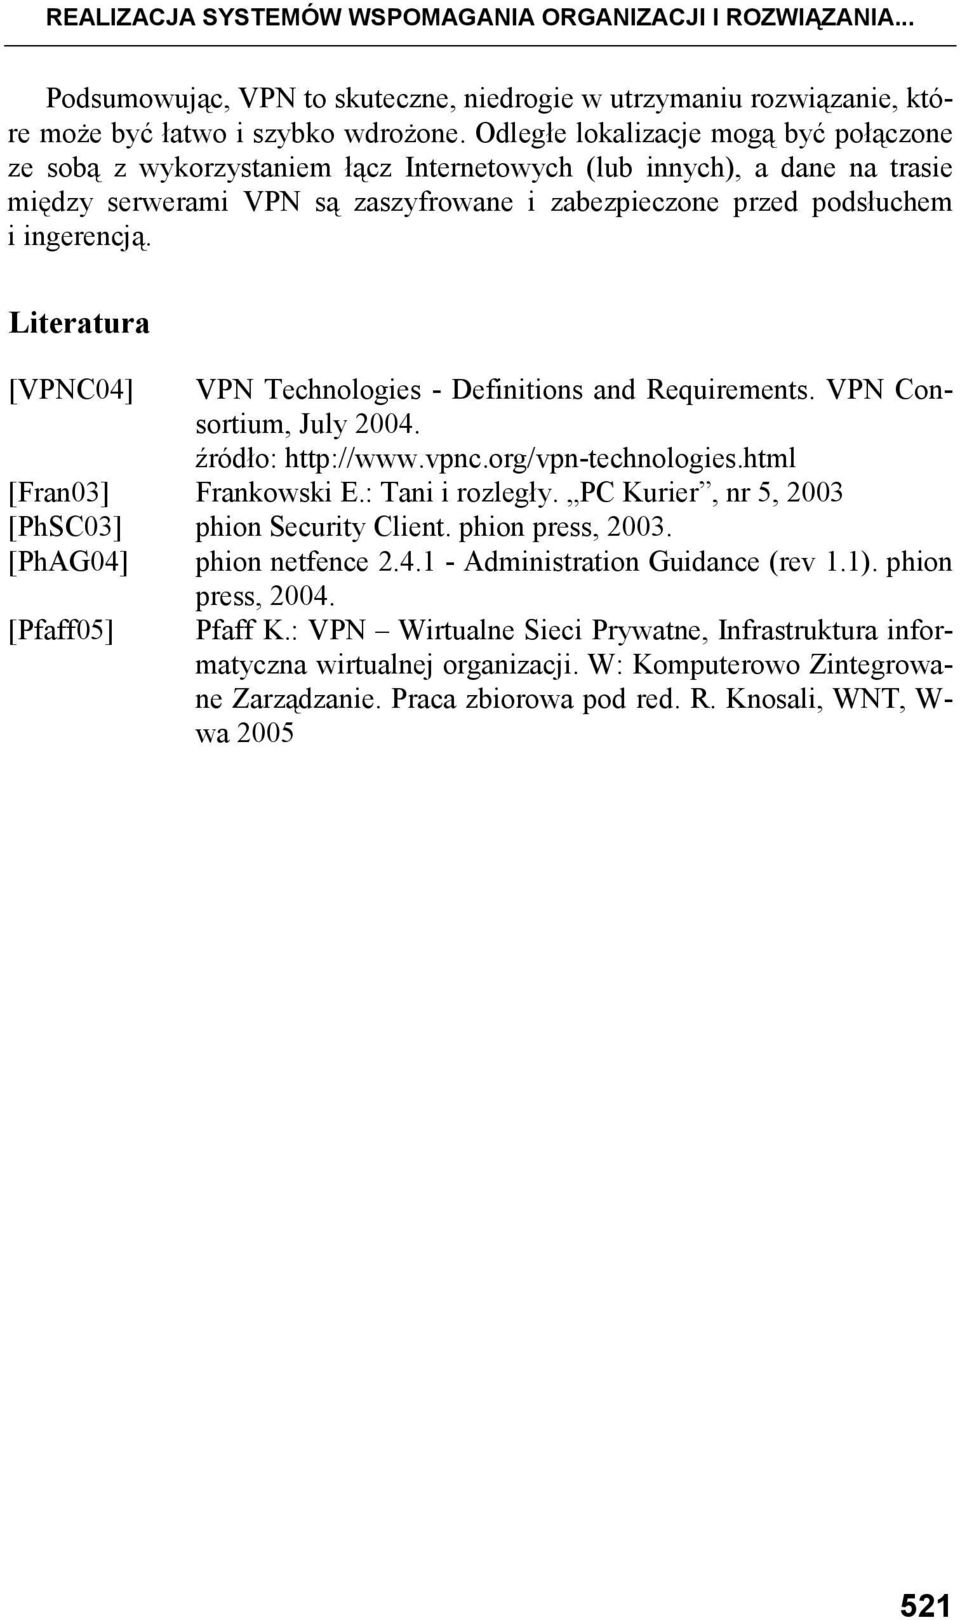 Literatura [VPNC04] VPN Technologies - Definitions and Requirements. VPN Consortium, July 2004. źródło: http://www.vpnc.org/vpn-technologies.html [Fran03] Frankowski E.: Tani i rozległy.